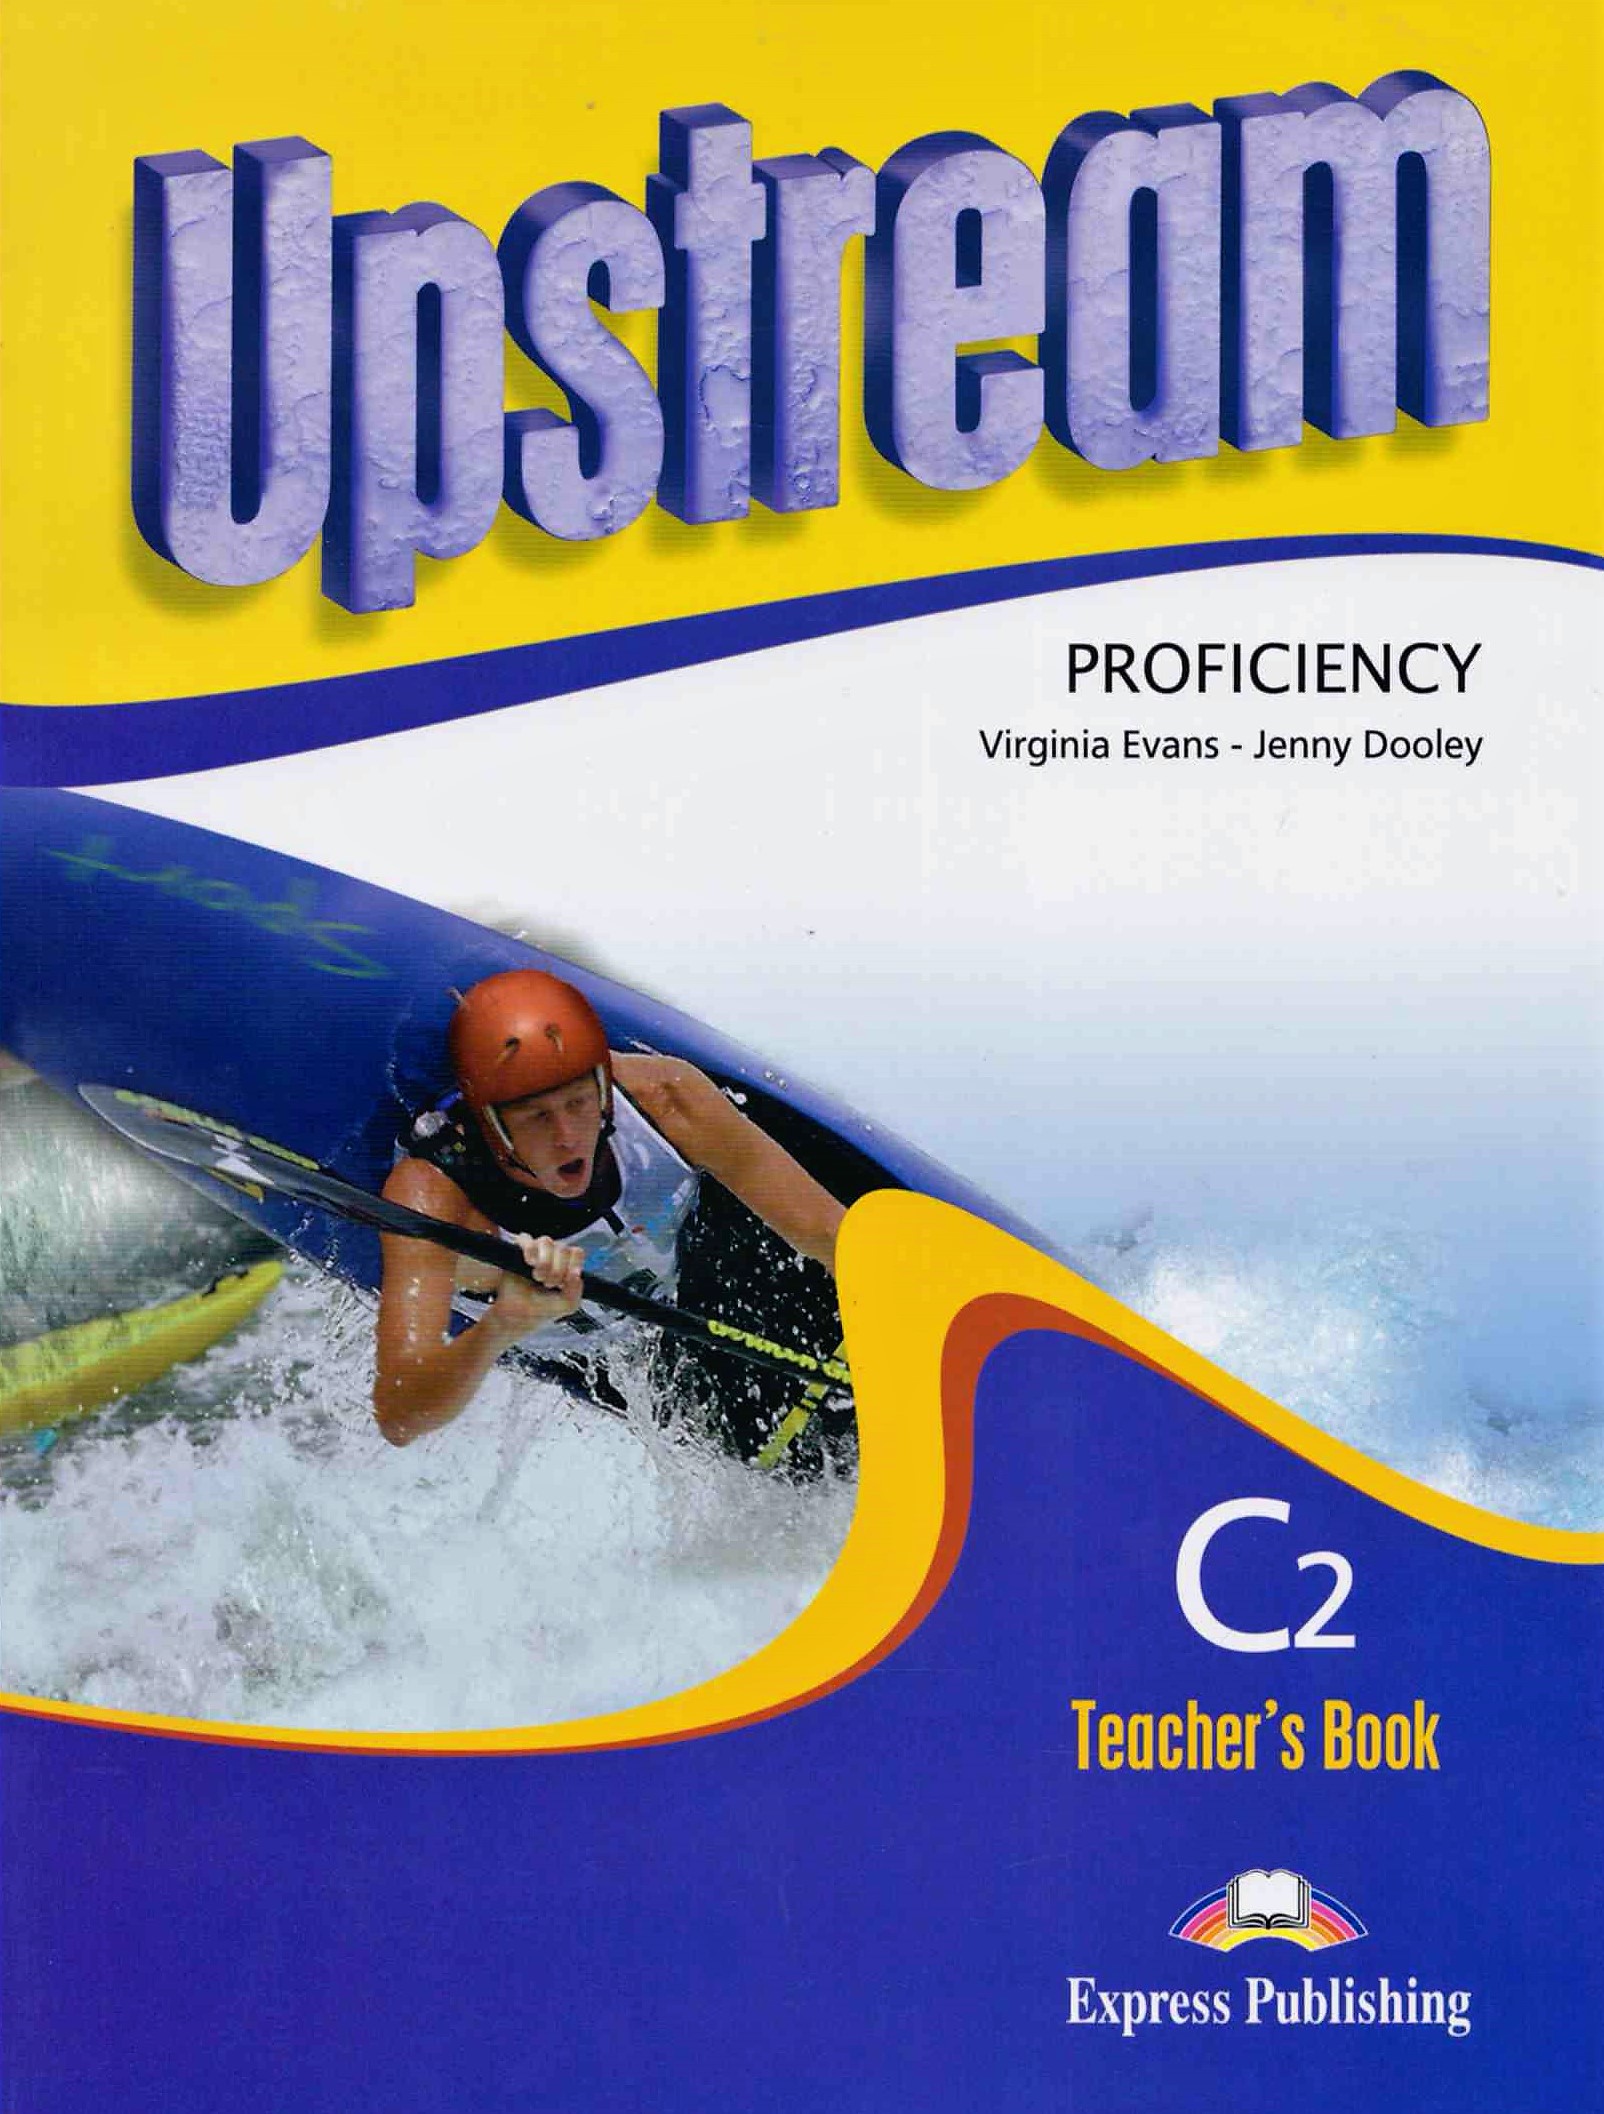 Upstream (2nd Edition) Proficiency C2 Teacher's Book / Книга для учителя